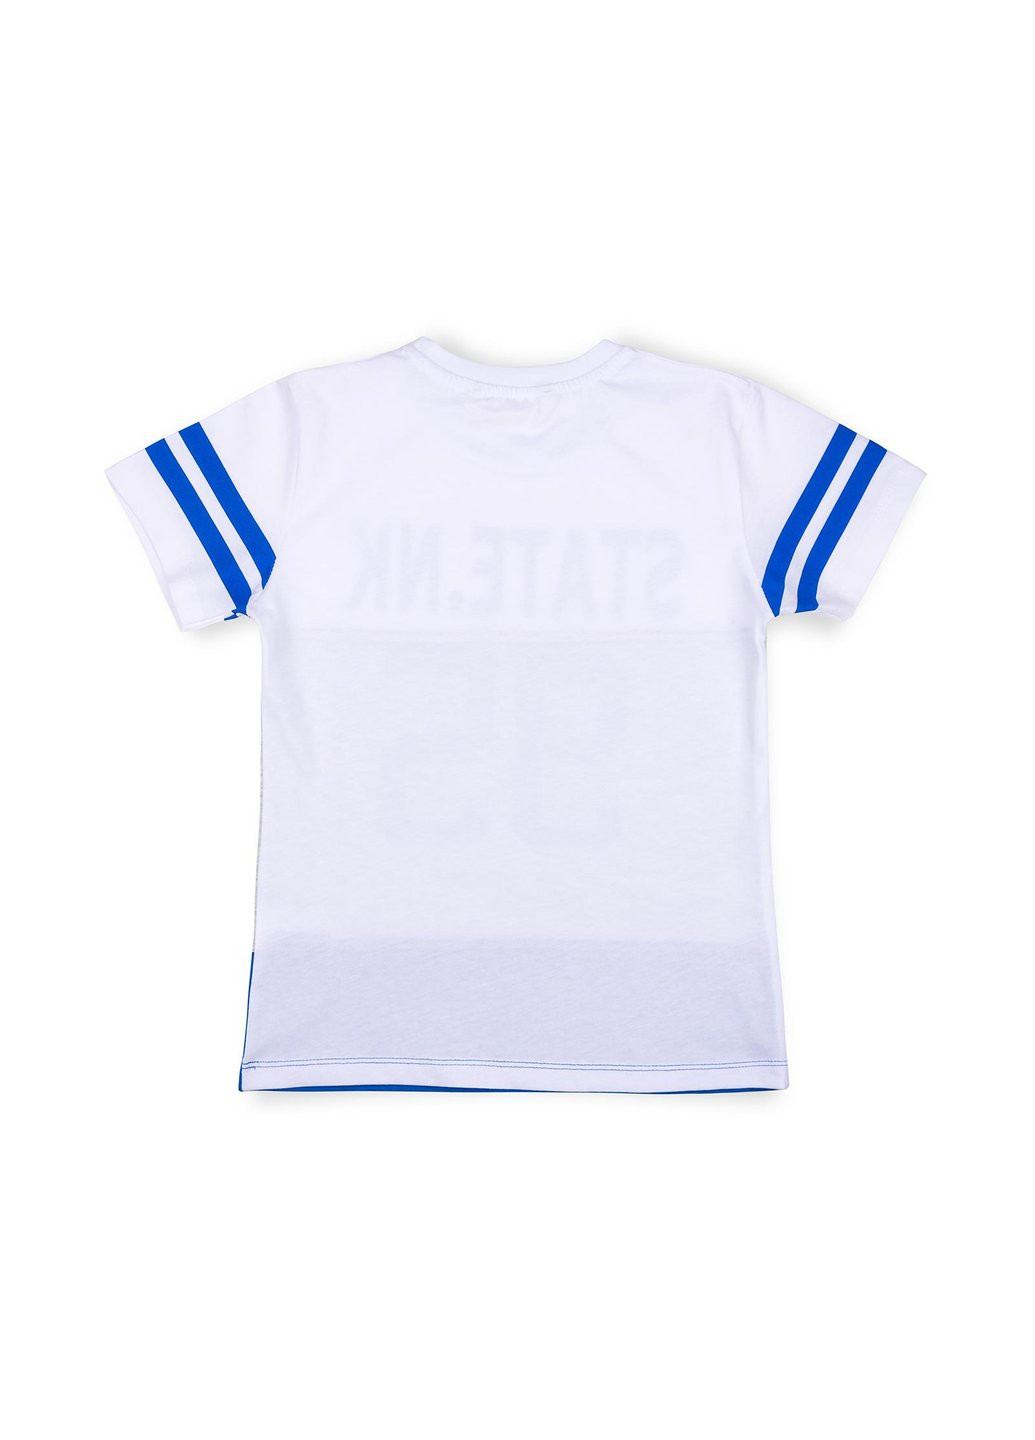 Белый летний набор детской одежды "state nk. 95" (11068-140b-white) Breeze